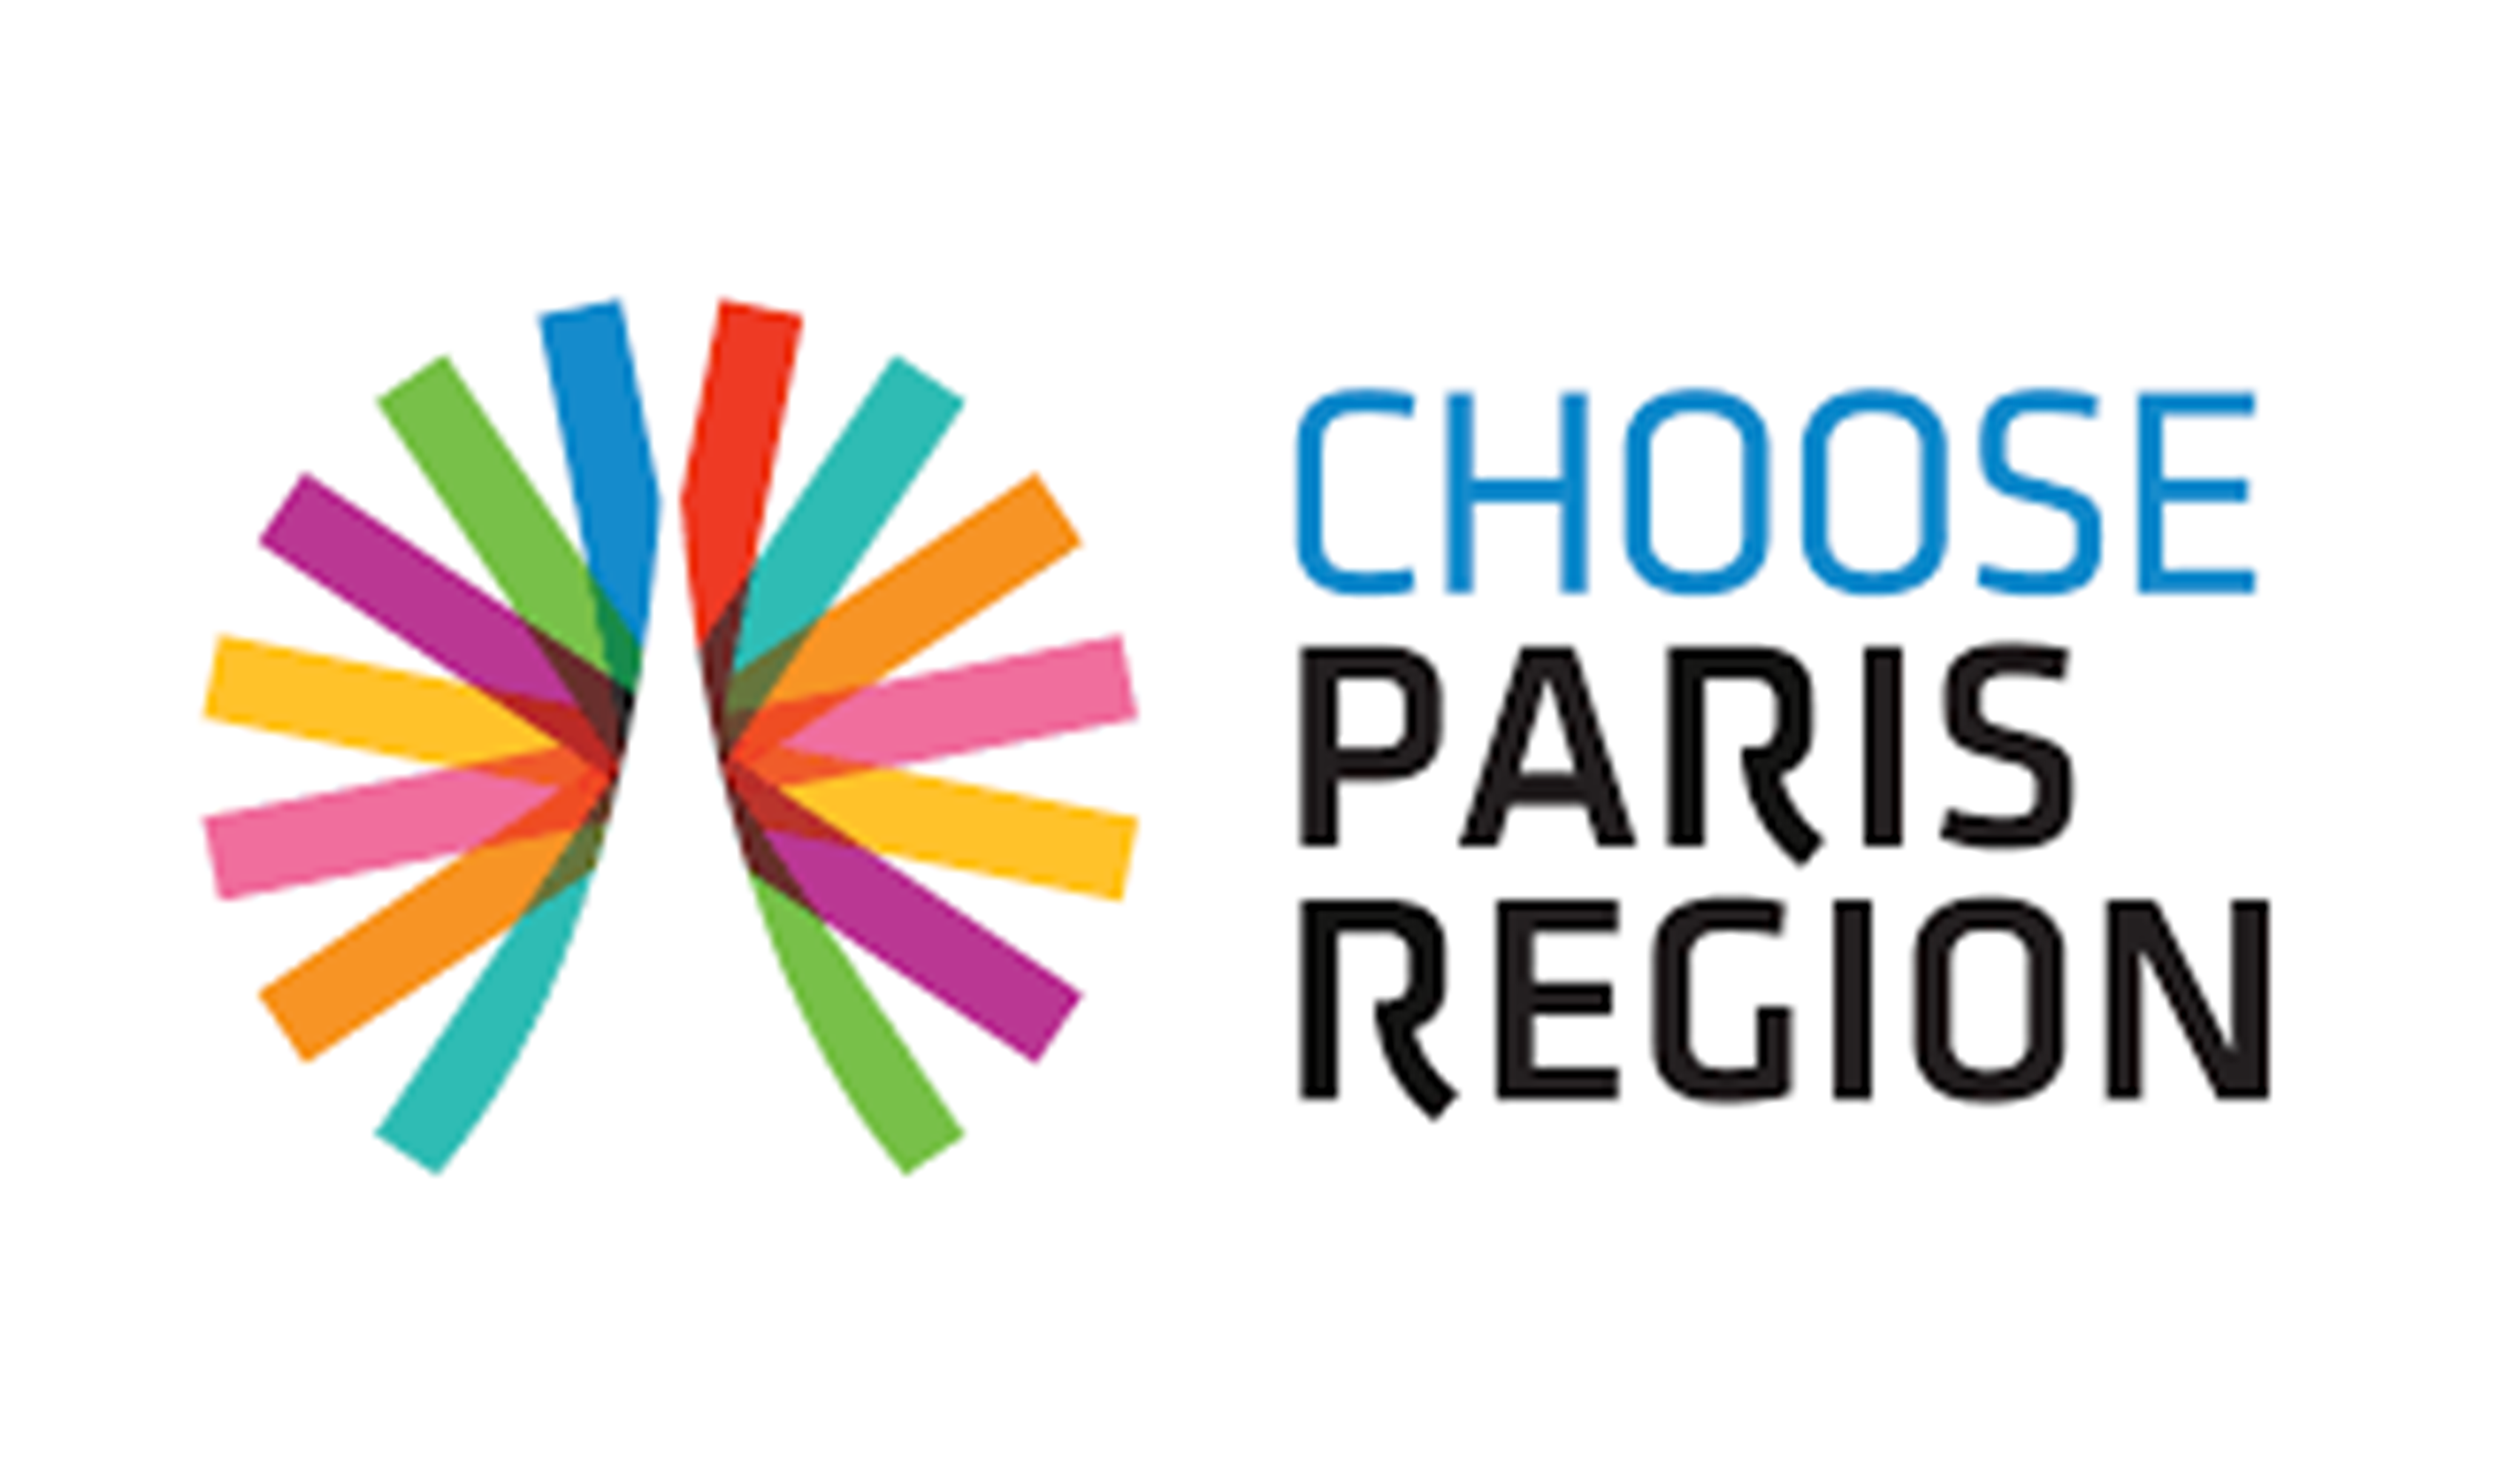 Customer Experience - Choose PARIS Region